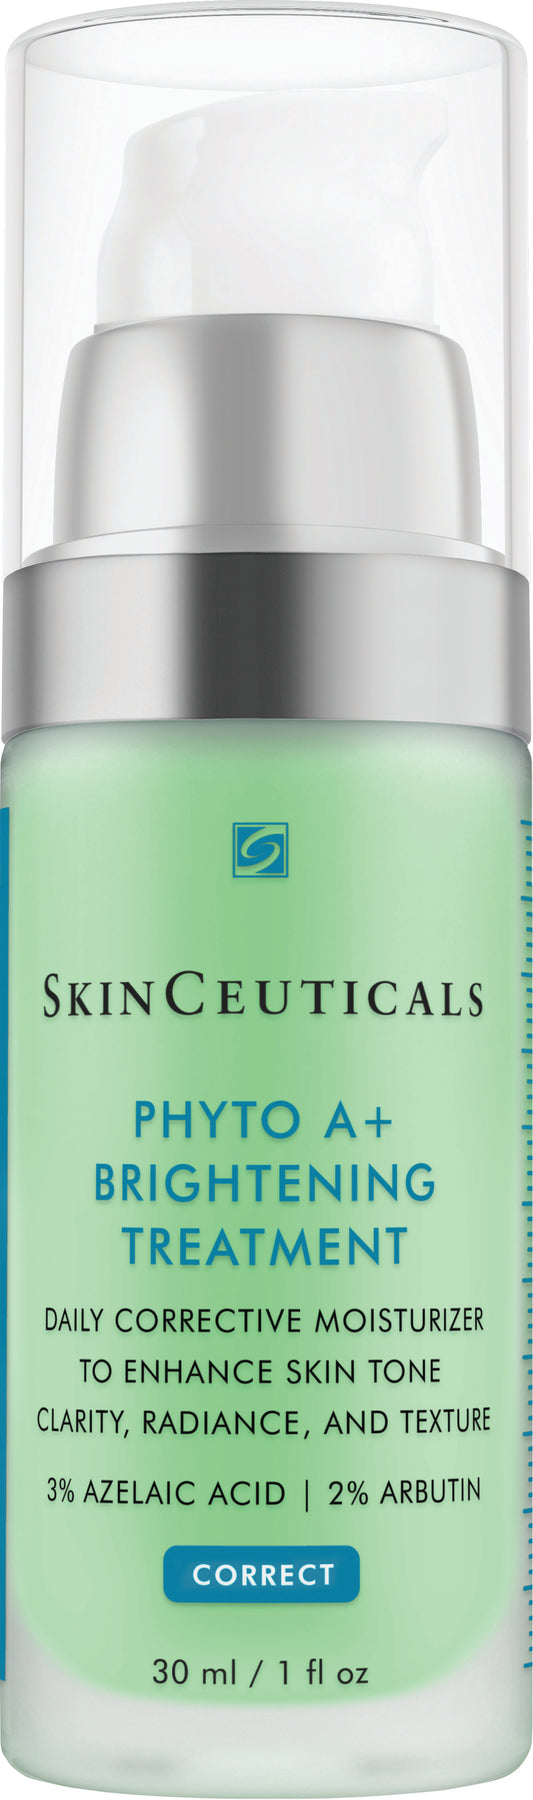 Phyto A+ Brightening treatment 30ml